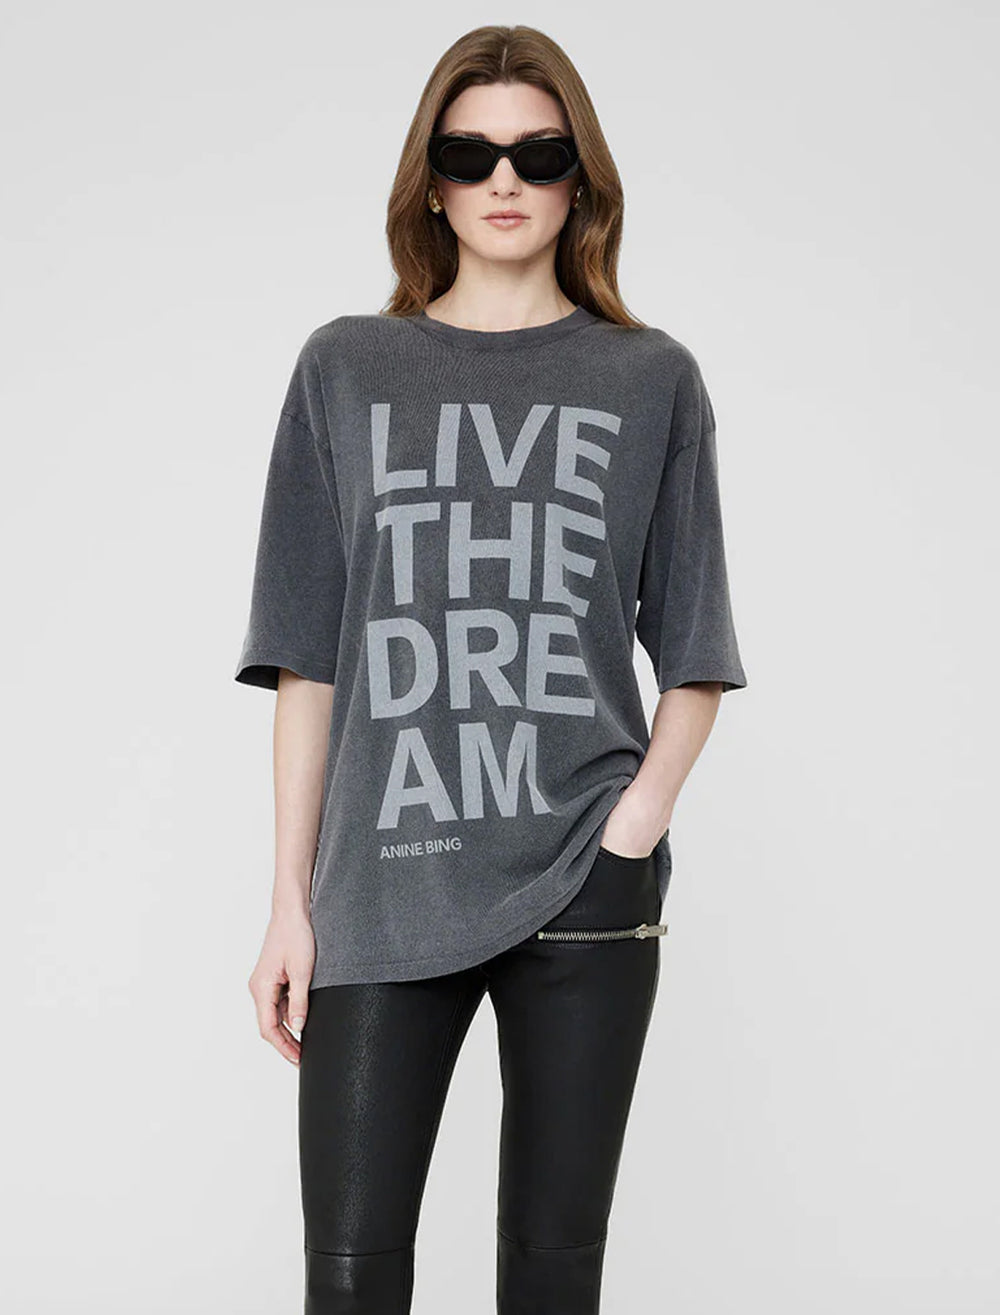 Model wearing Anine Bing's cason tee live the dream.